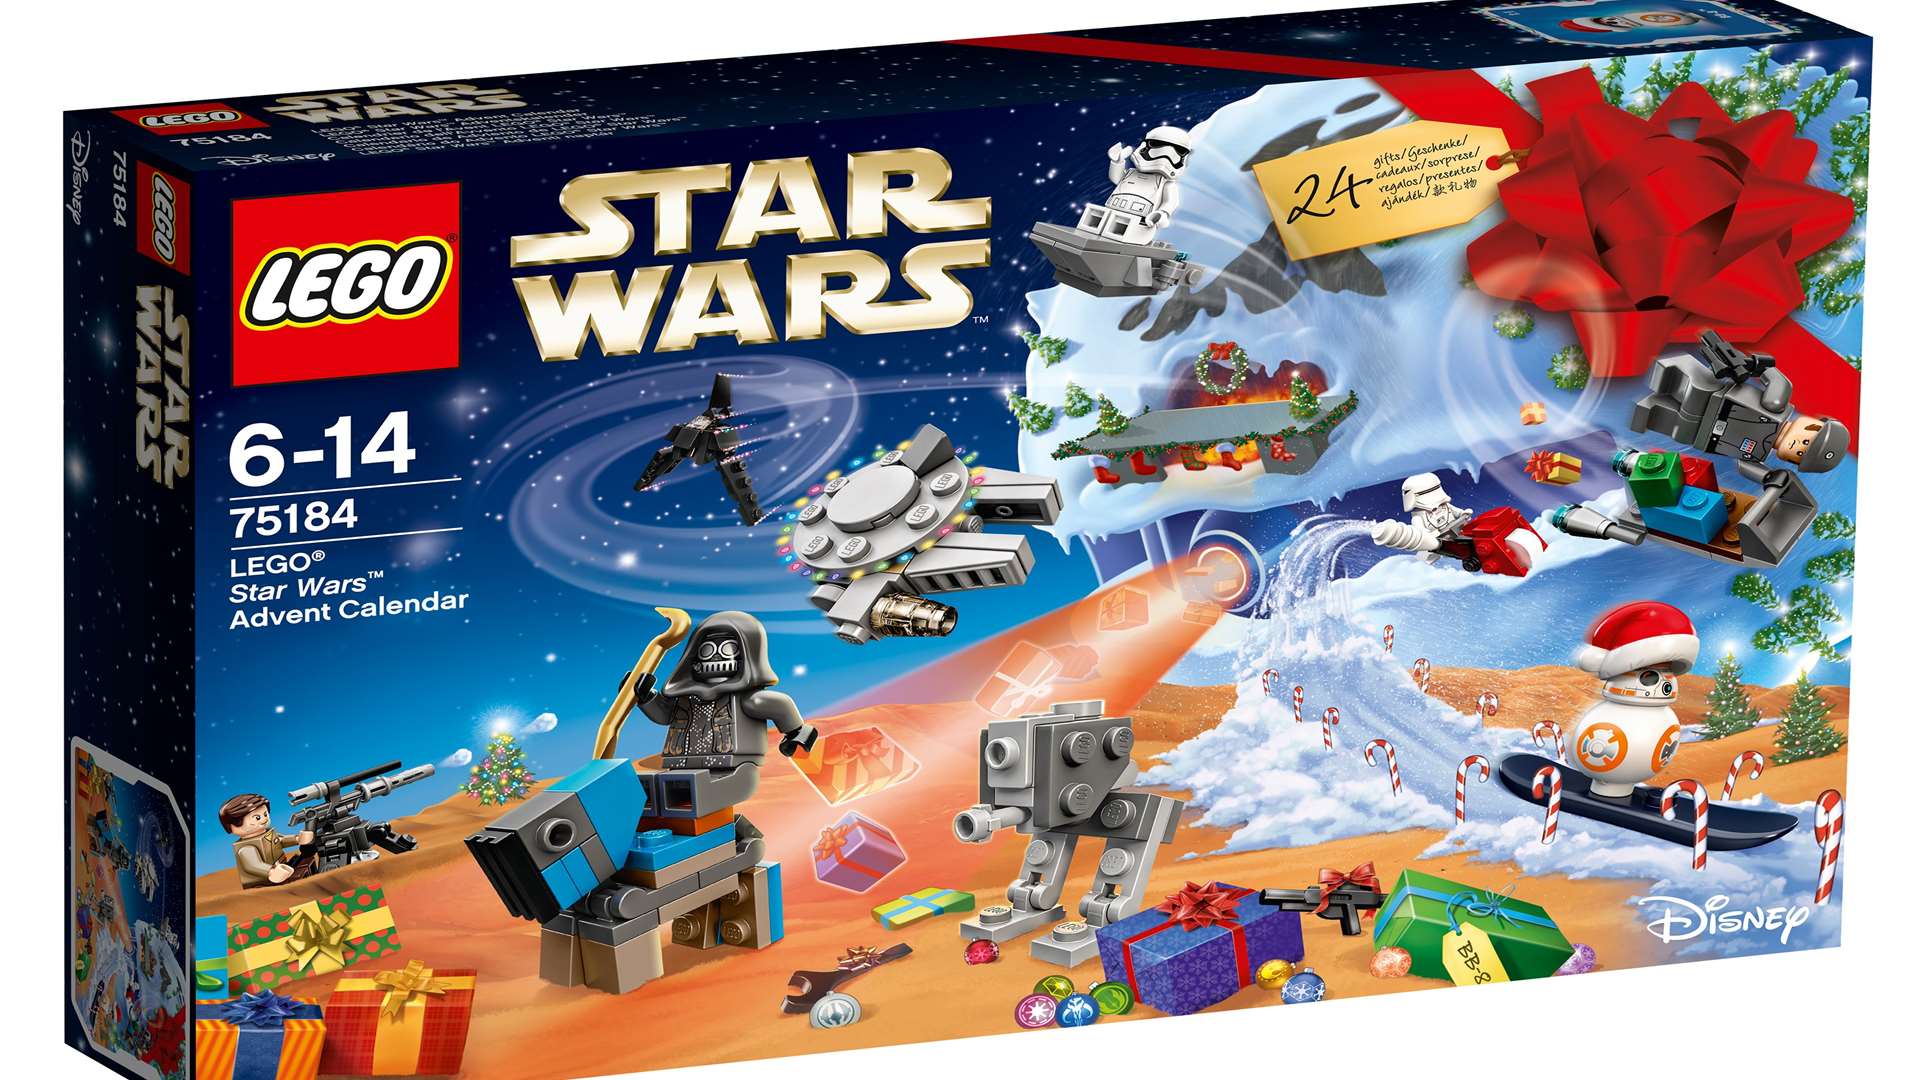 LEGO Star Wars advent calendar, John Lewis, £24.95